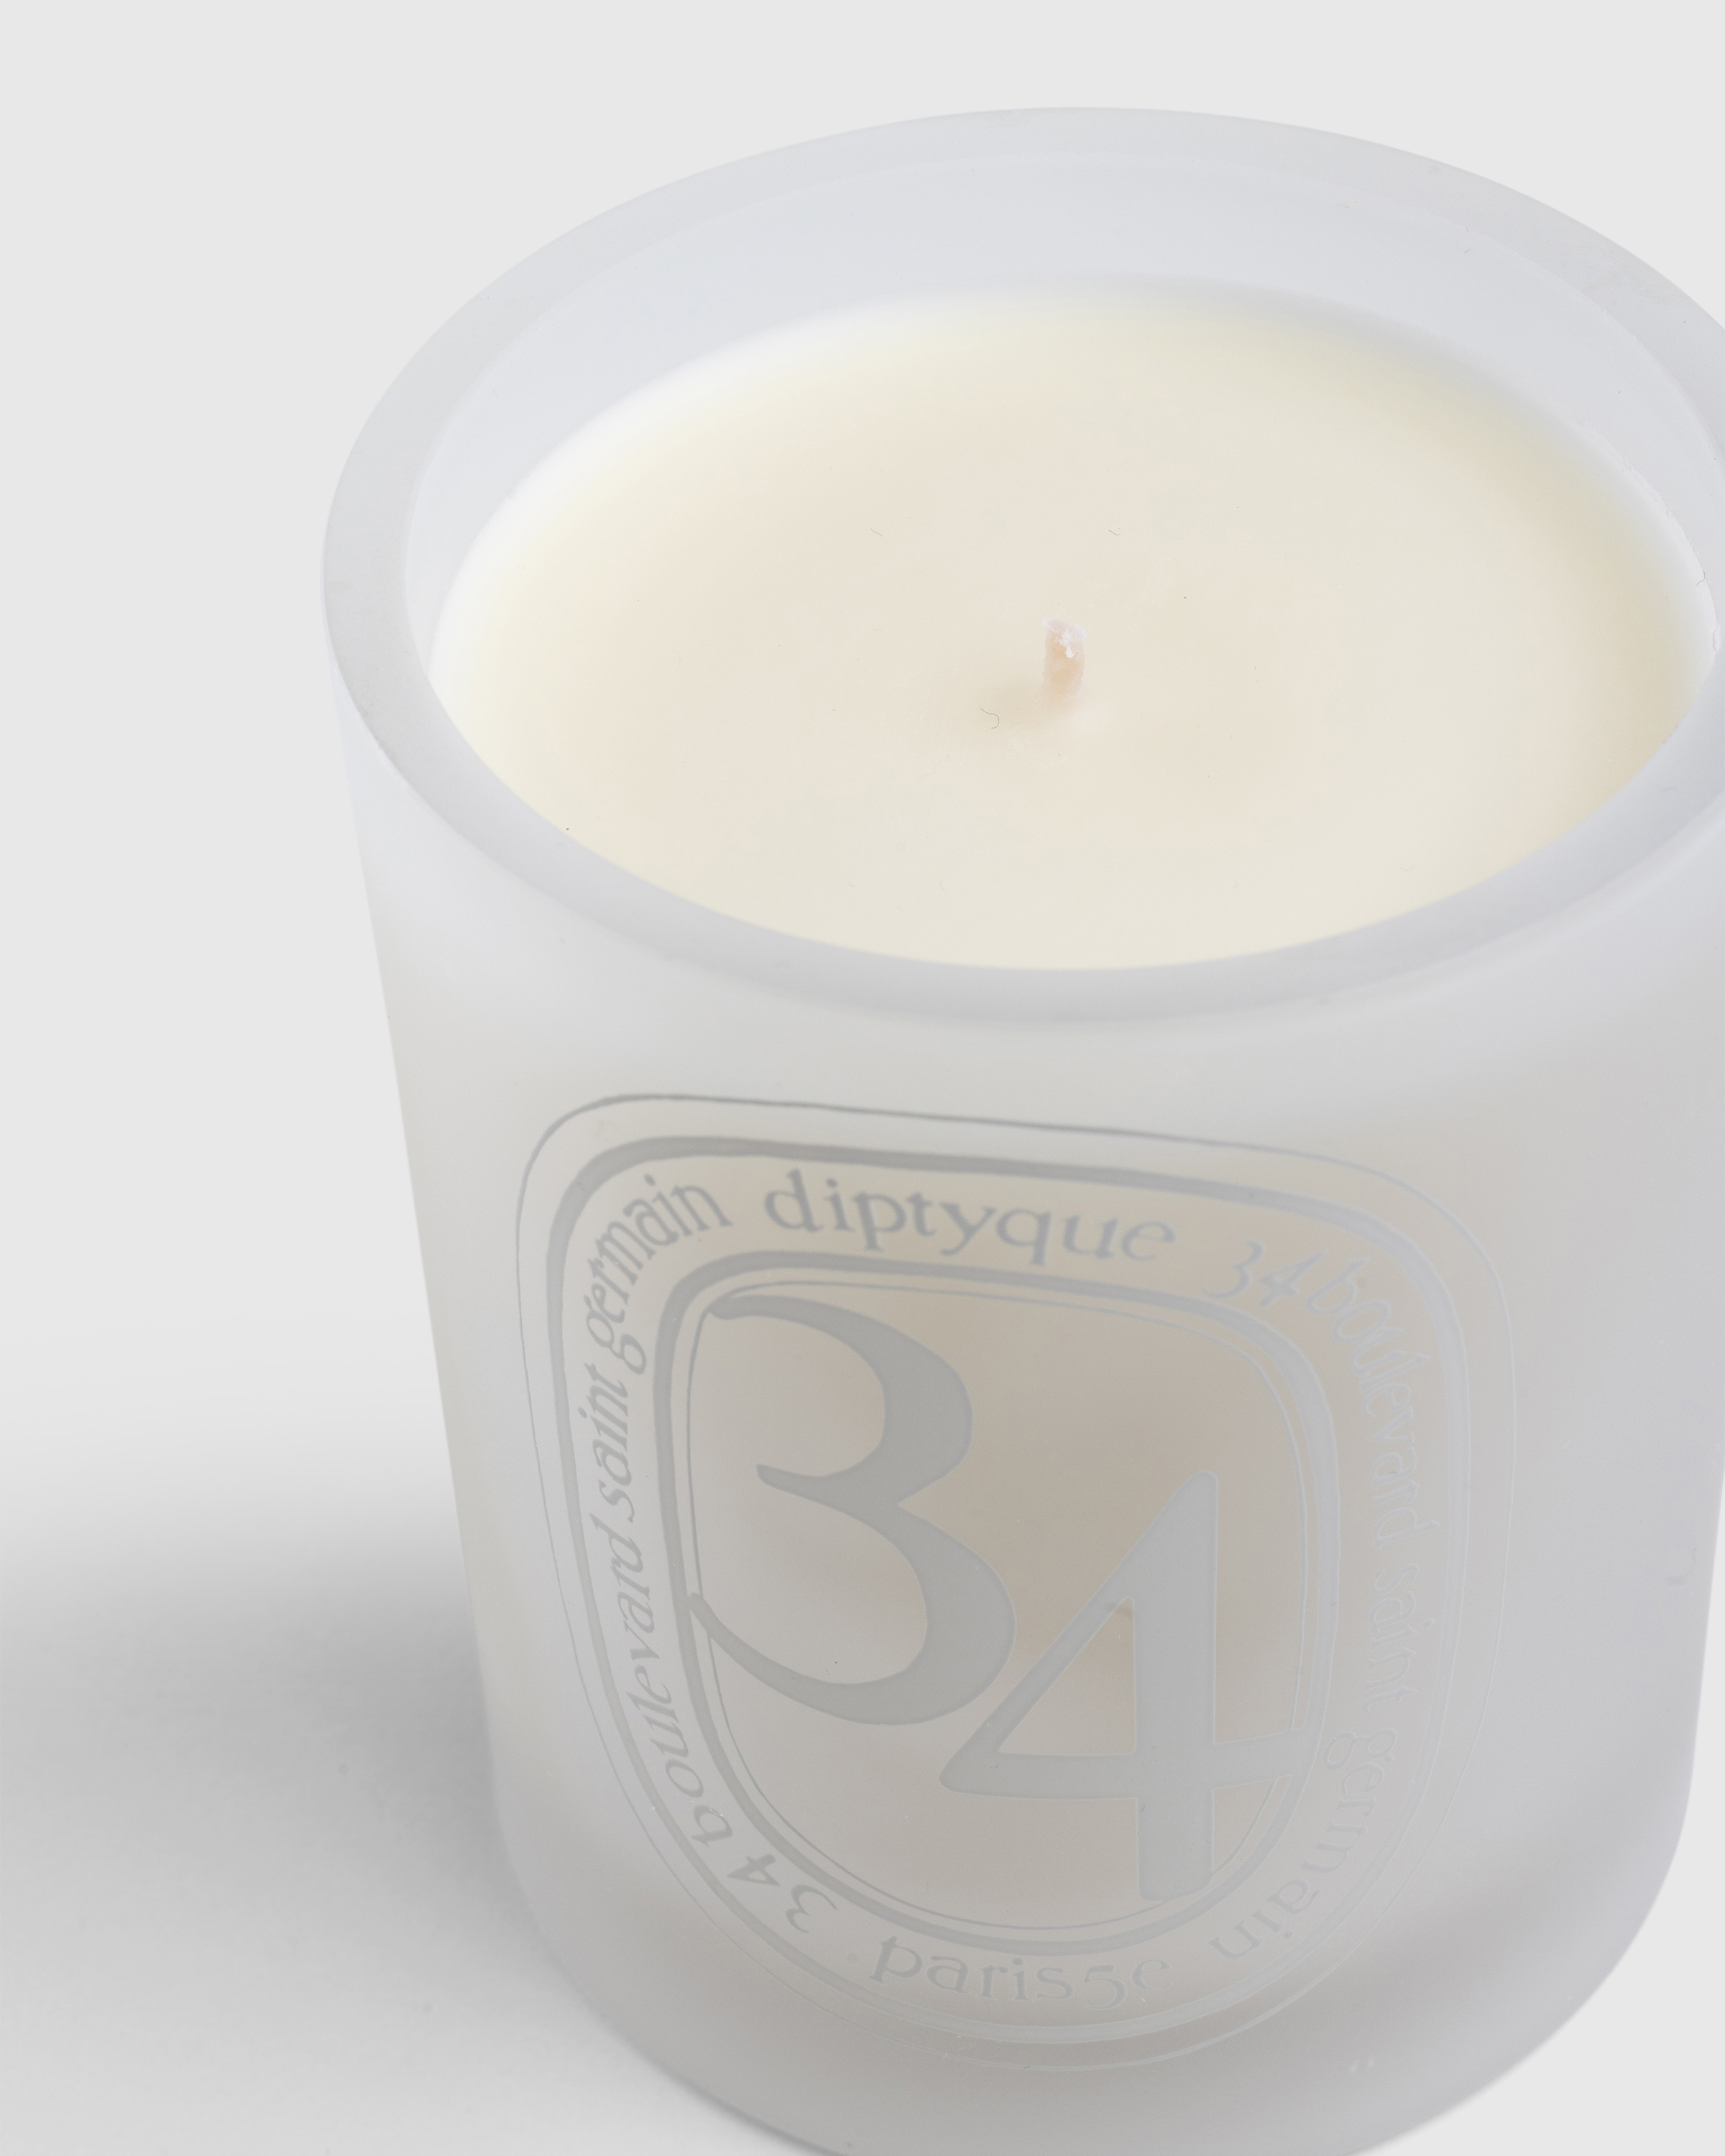 Diptyque – Candle 34 Boulevard Saint-Germain 300g - Candles & Fragrances - White - Image 2